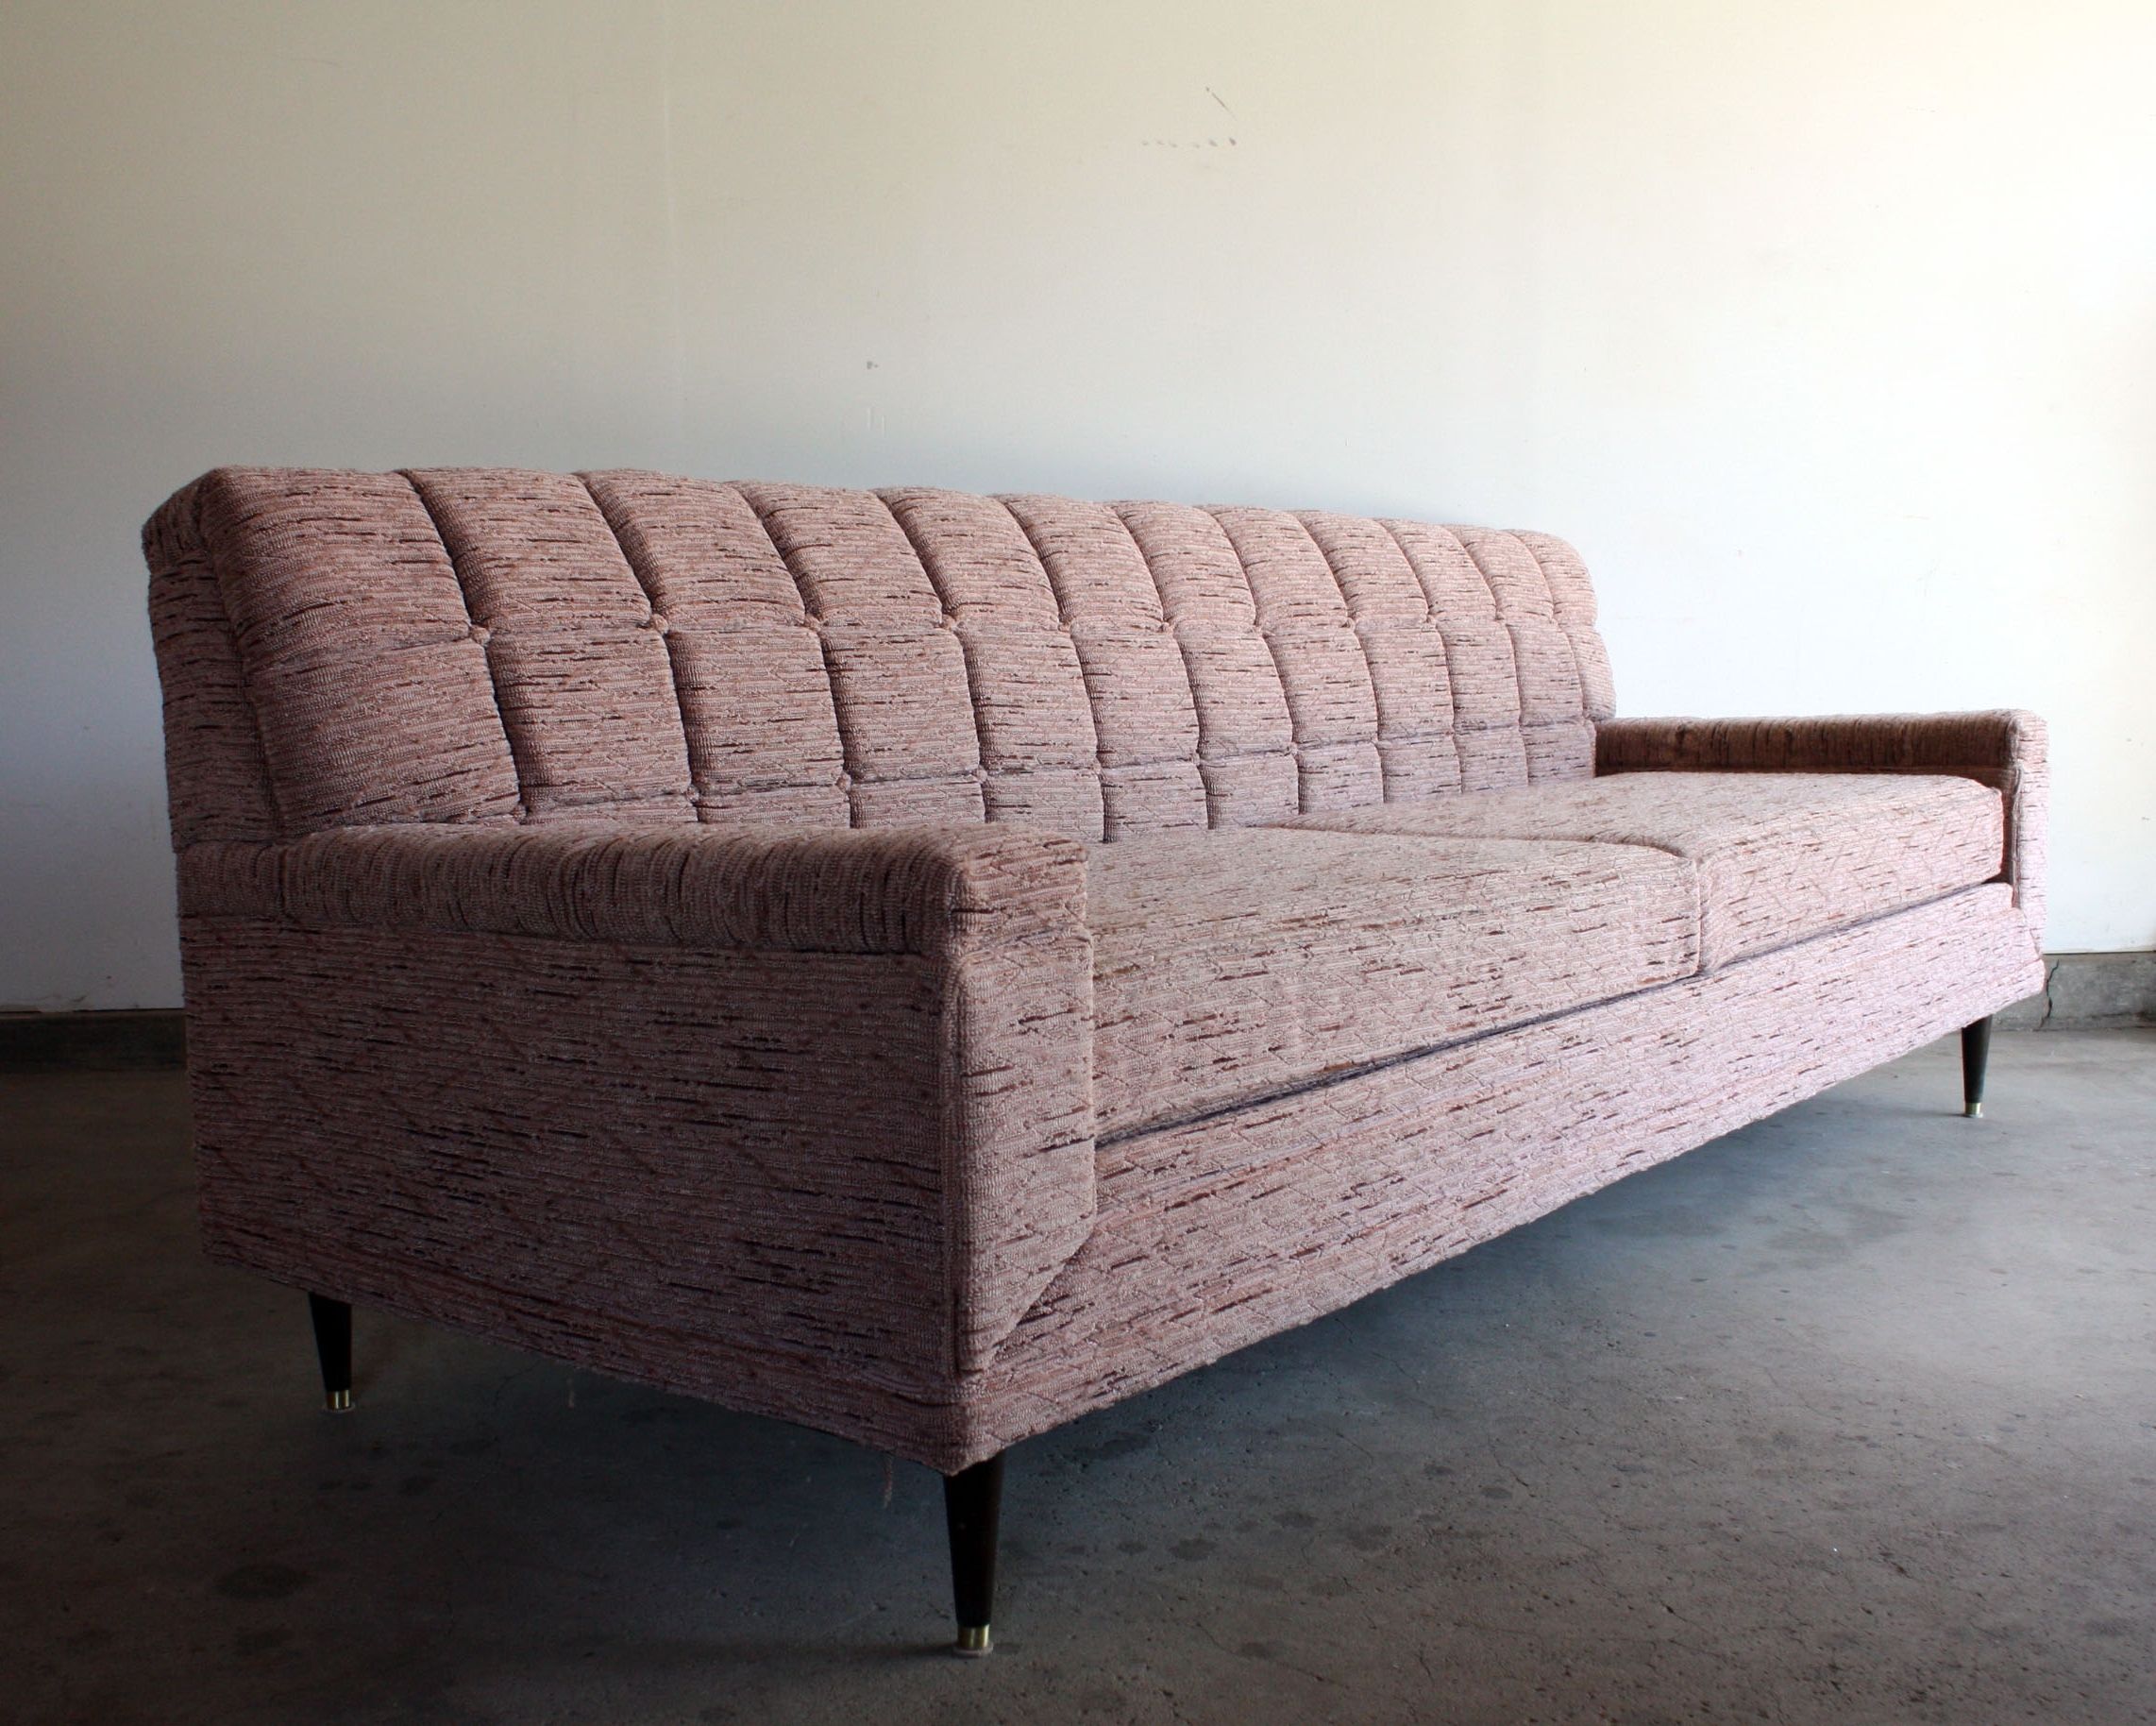 Trendy Kijiji Kitchener Sectional Sofas With Regard To Furniture : Green Tufted Chaise Lounge Furniture Making Ottawa (View 14 of 15)